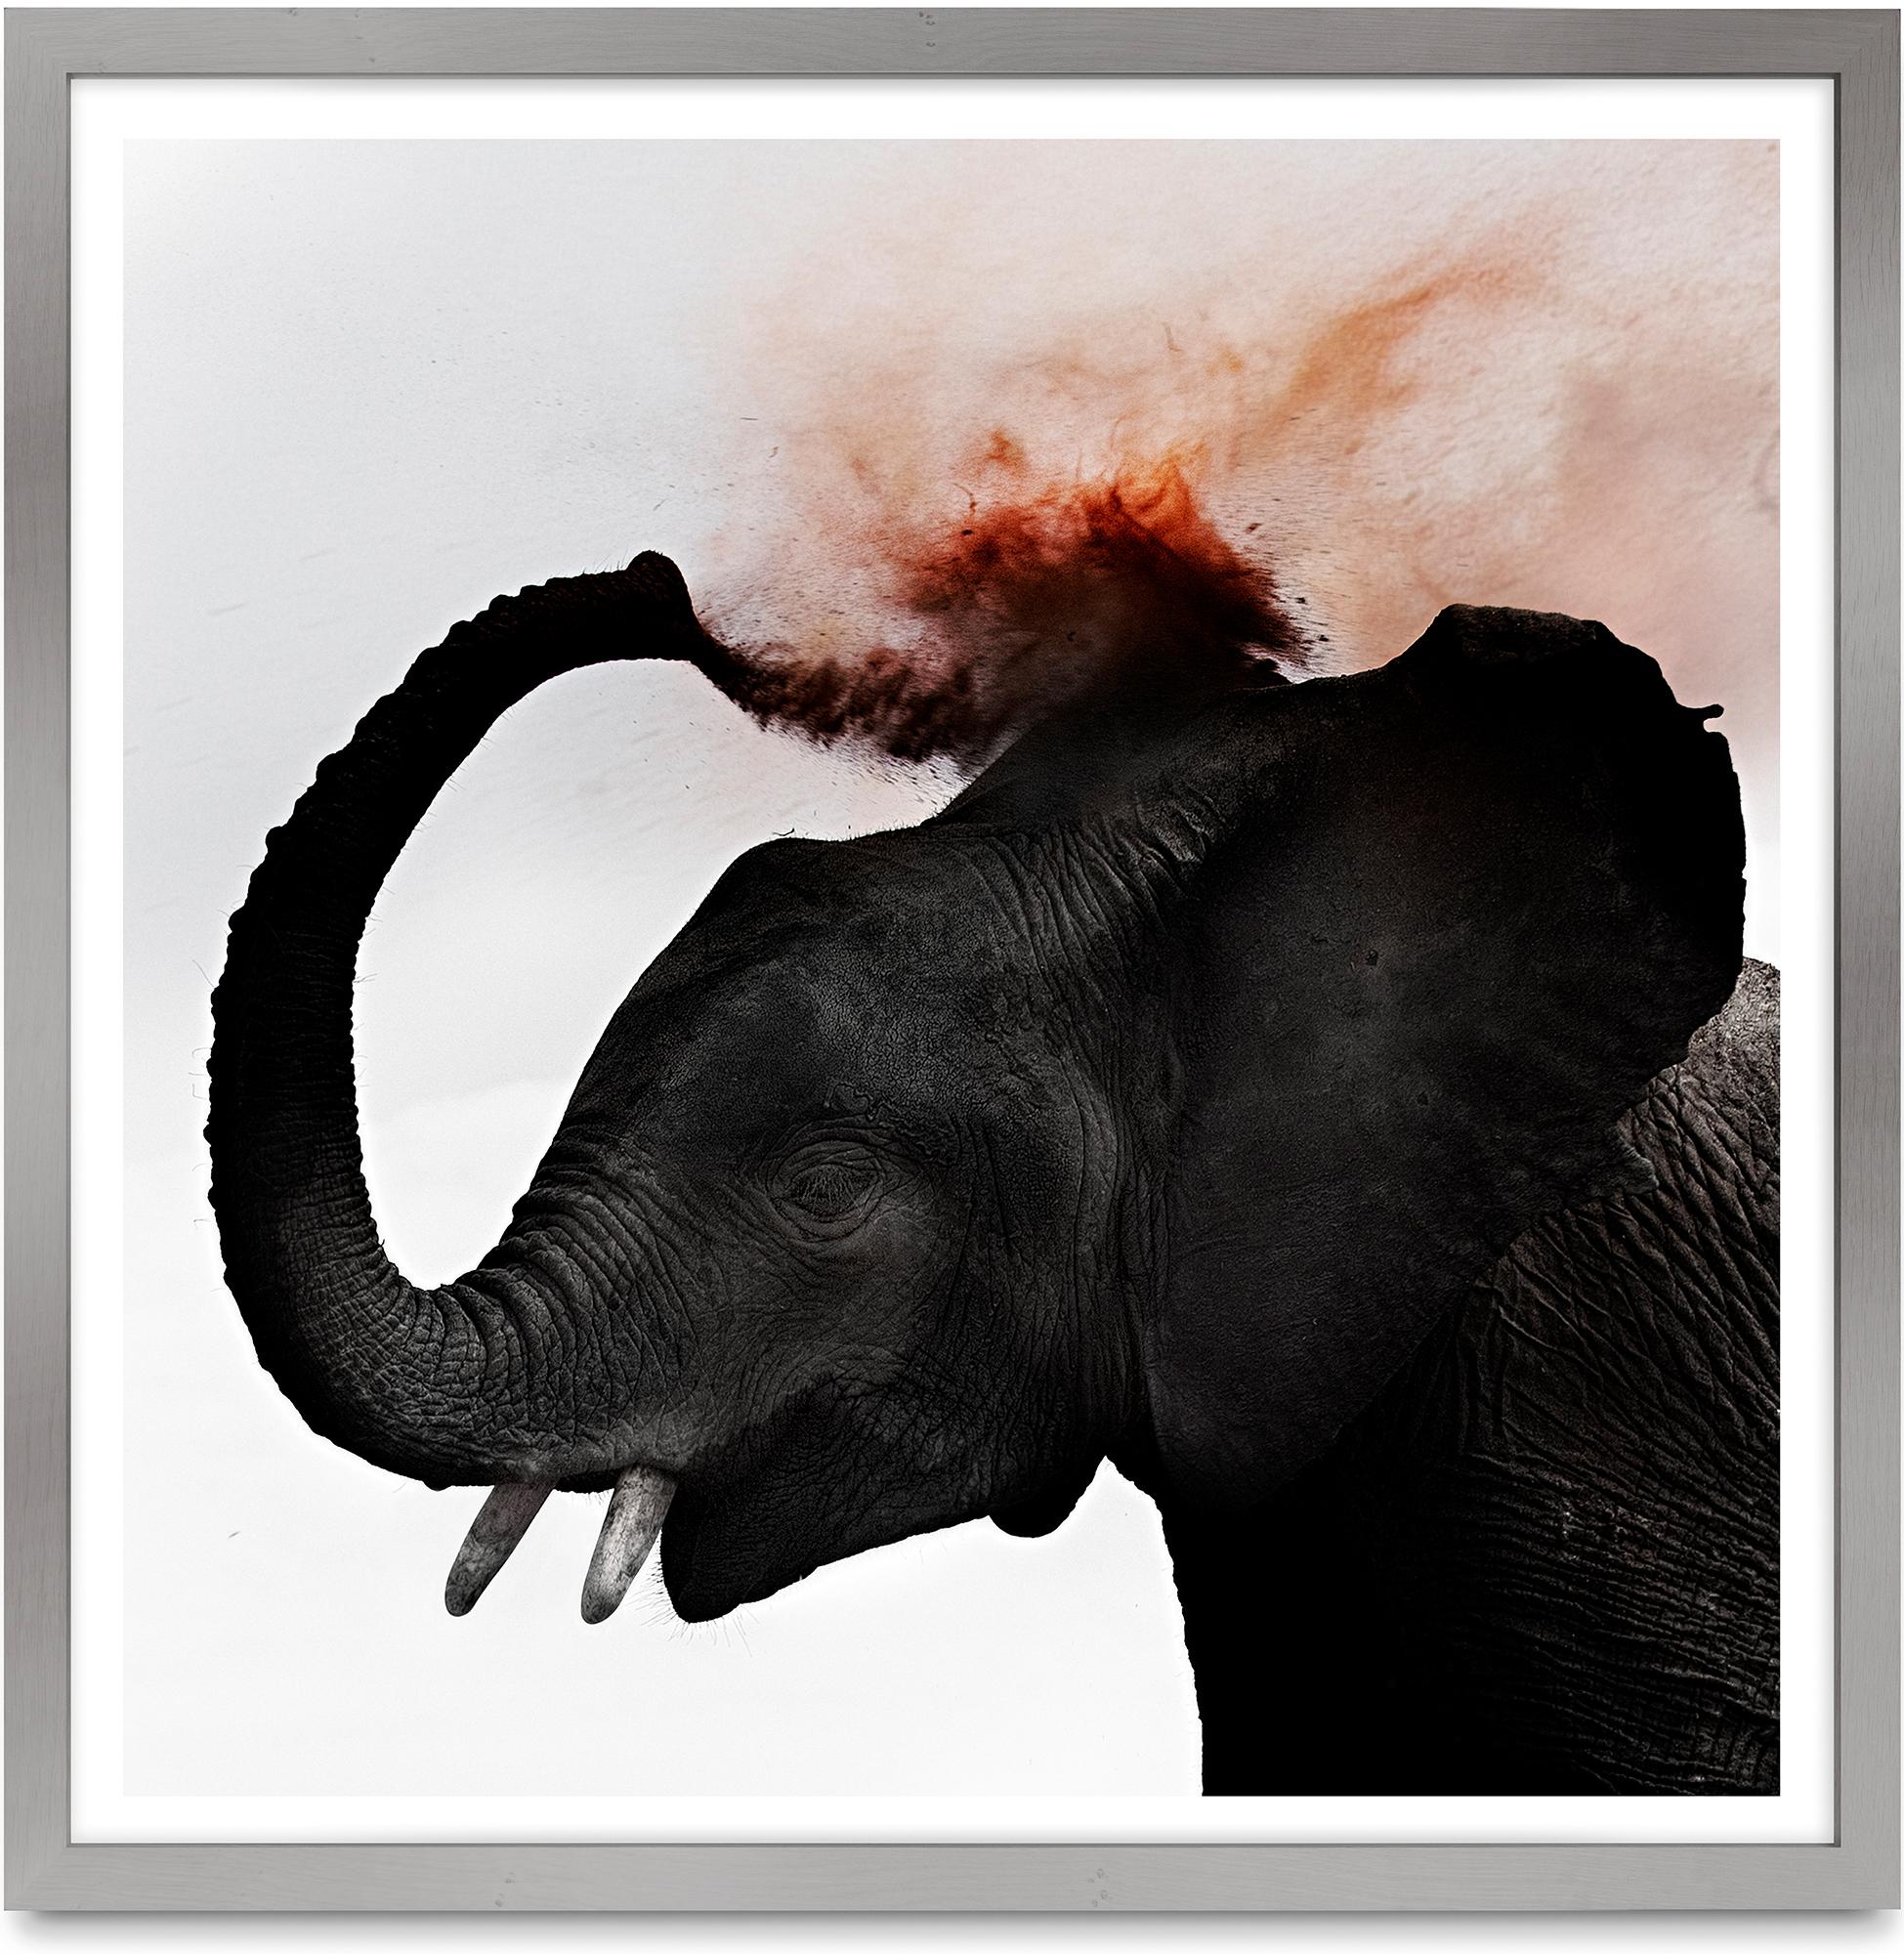 Joachim Schmeisser Color Photograph - Dust III, Kenya, Elephant, animal, wildlife, color photography, africa